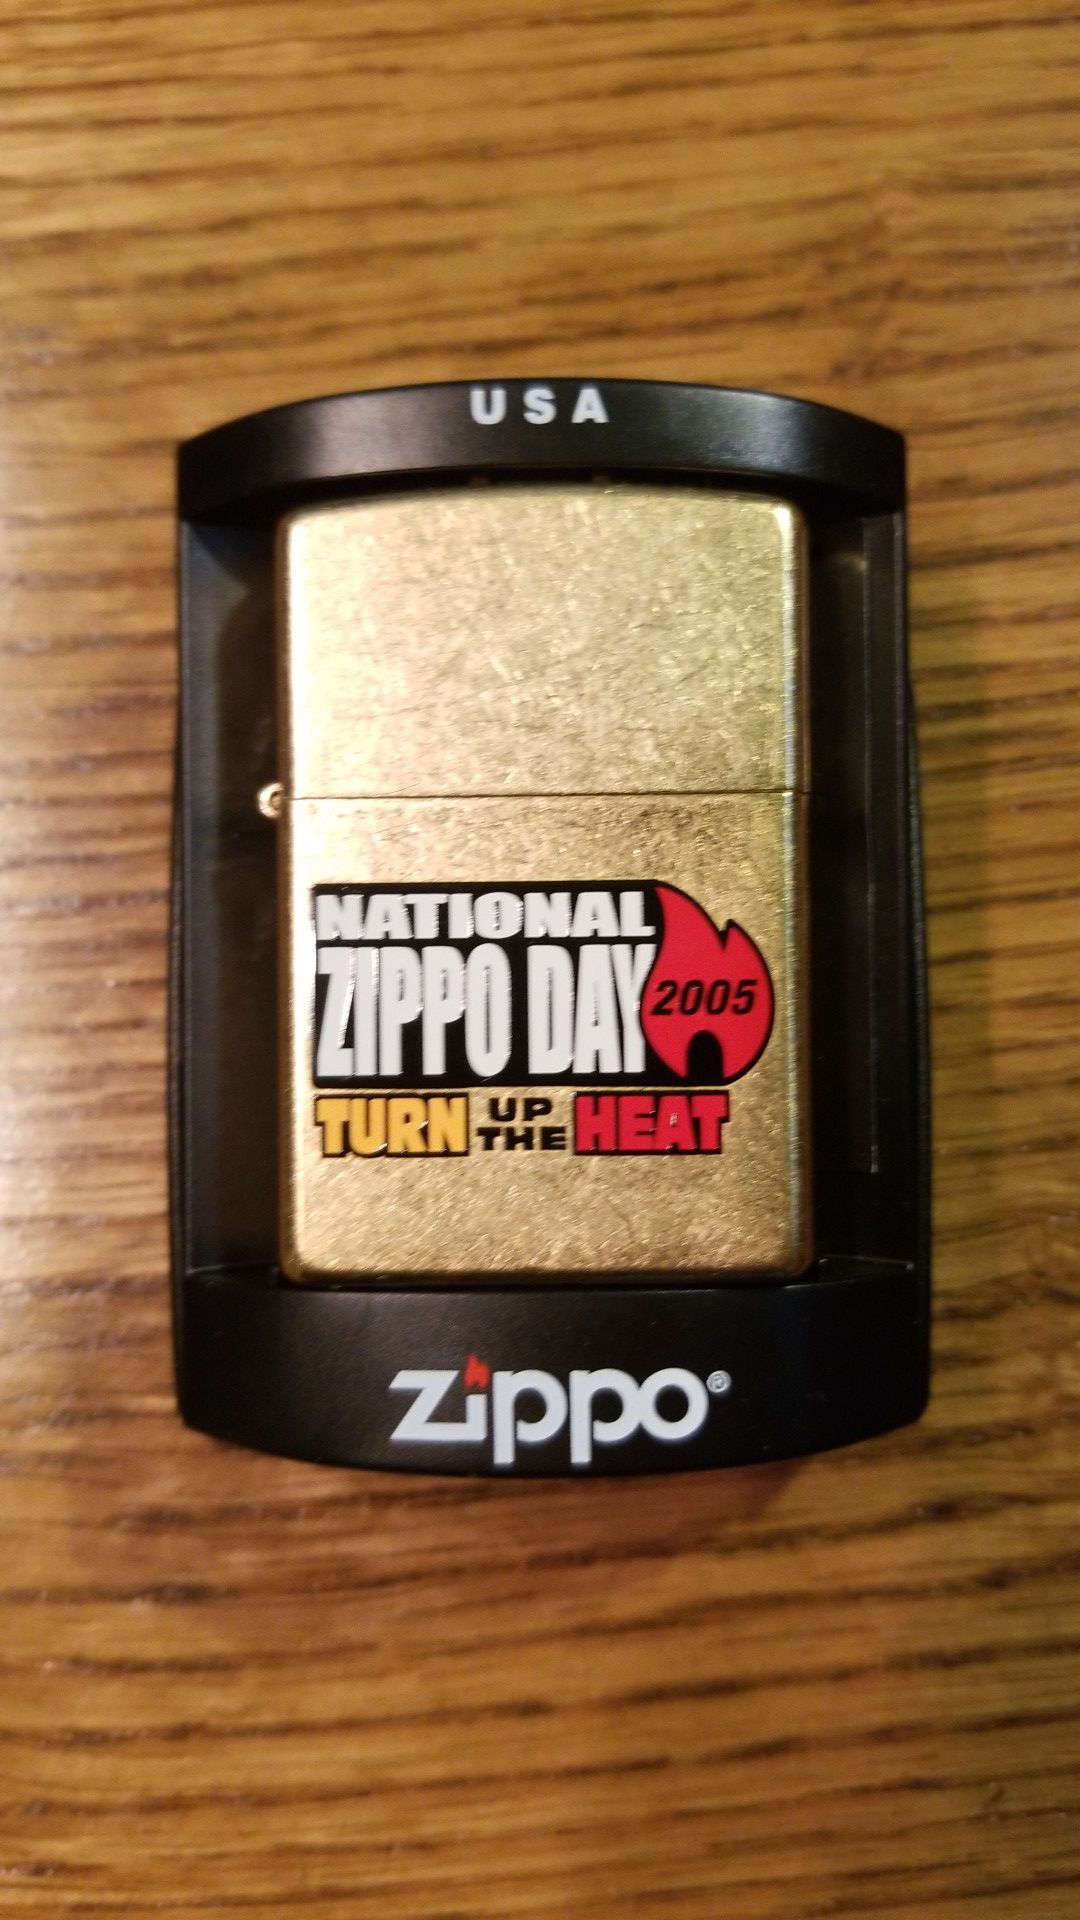 2005 Zippo lighter with logo